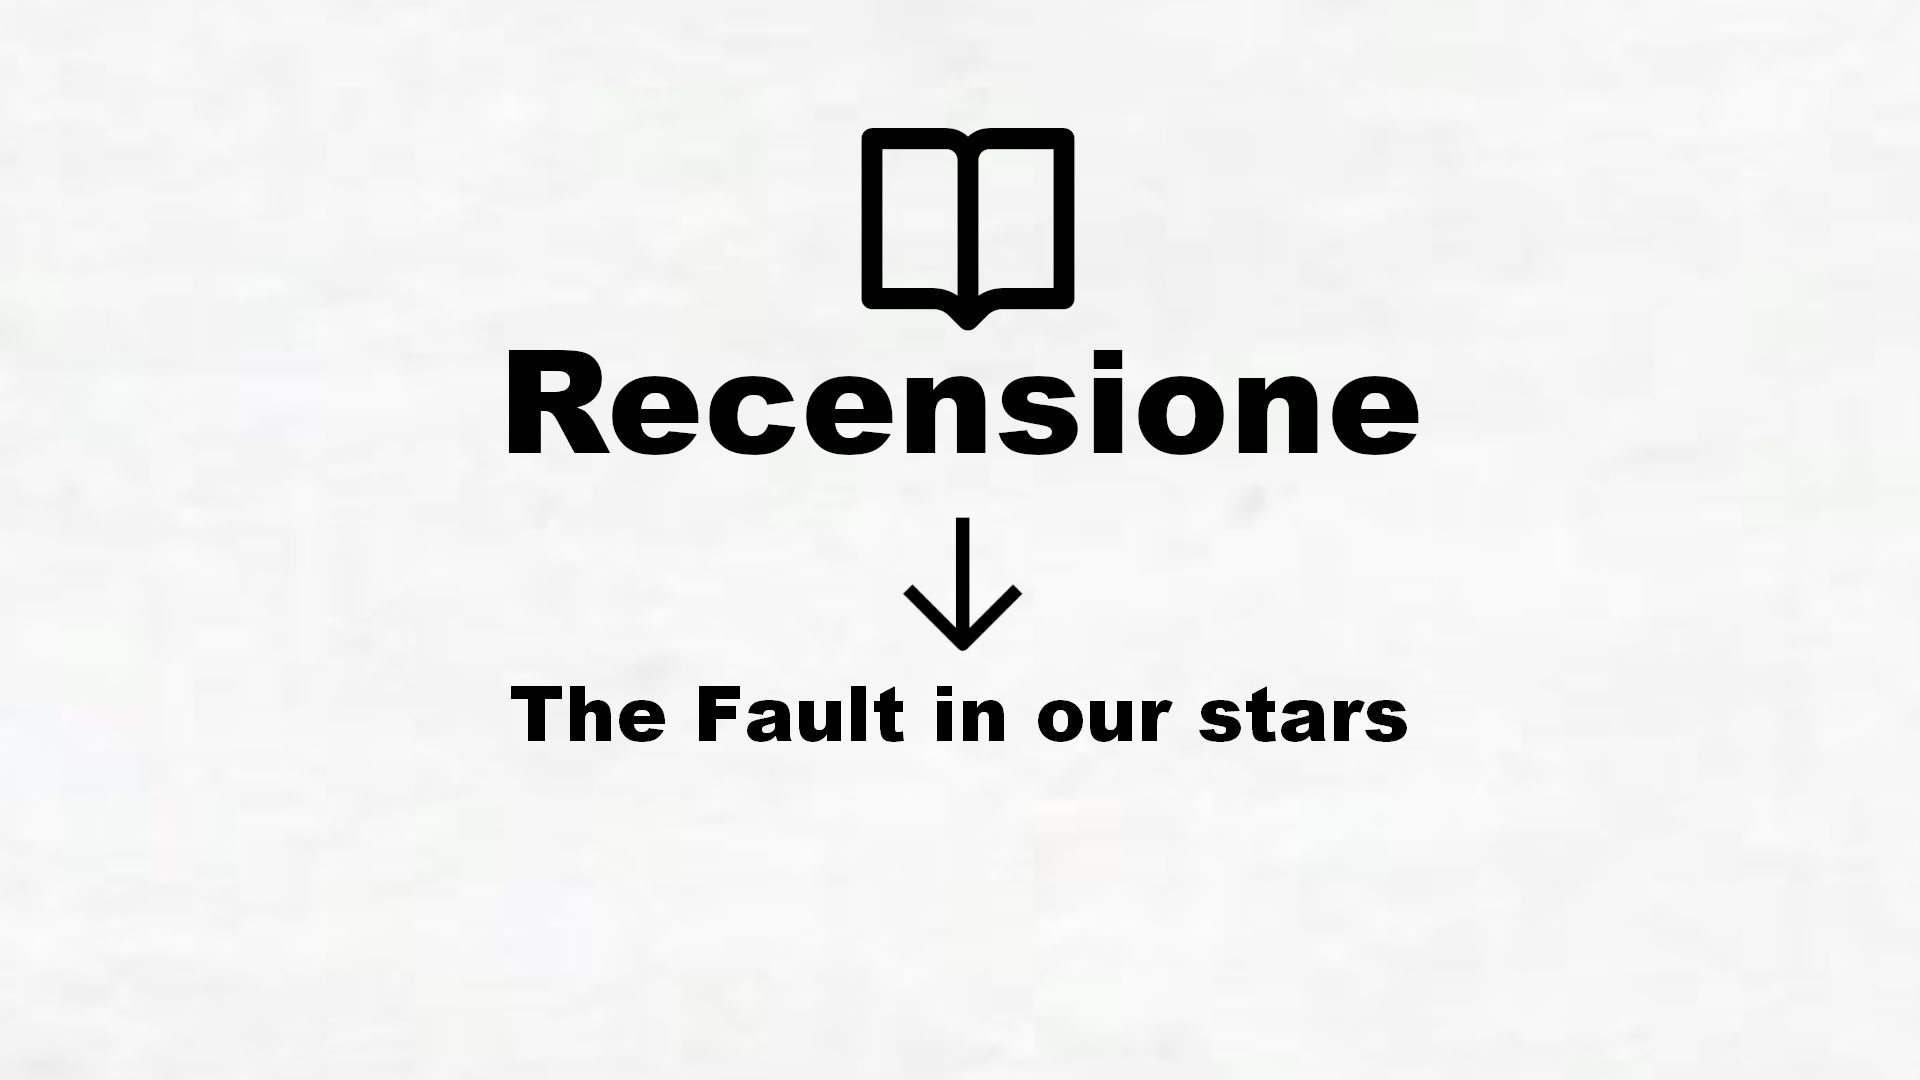 The Fault in our stars – Recensione Libro